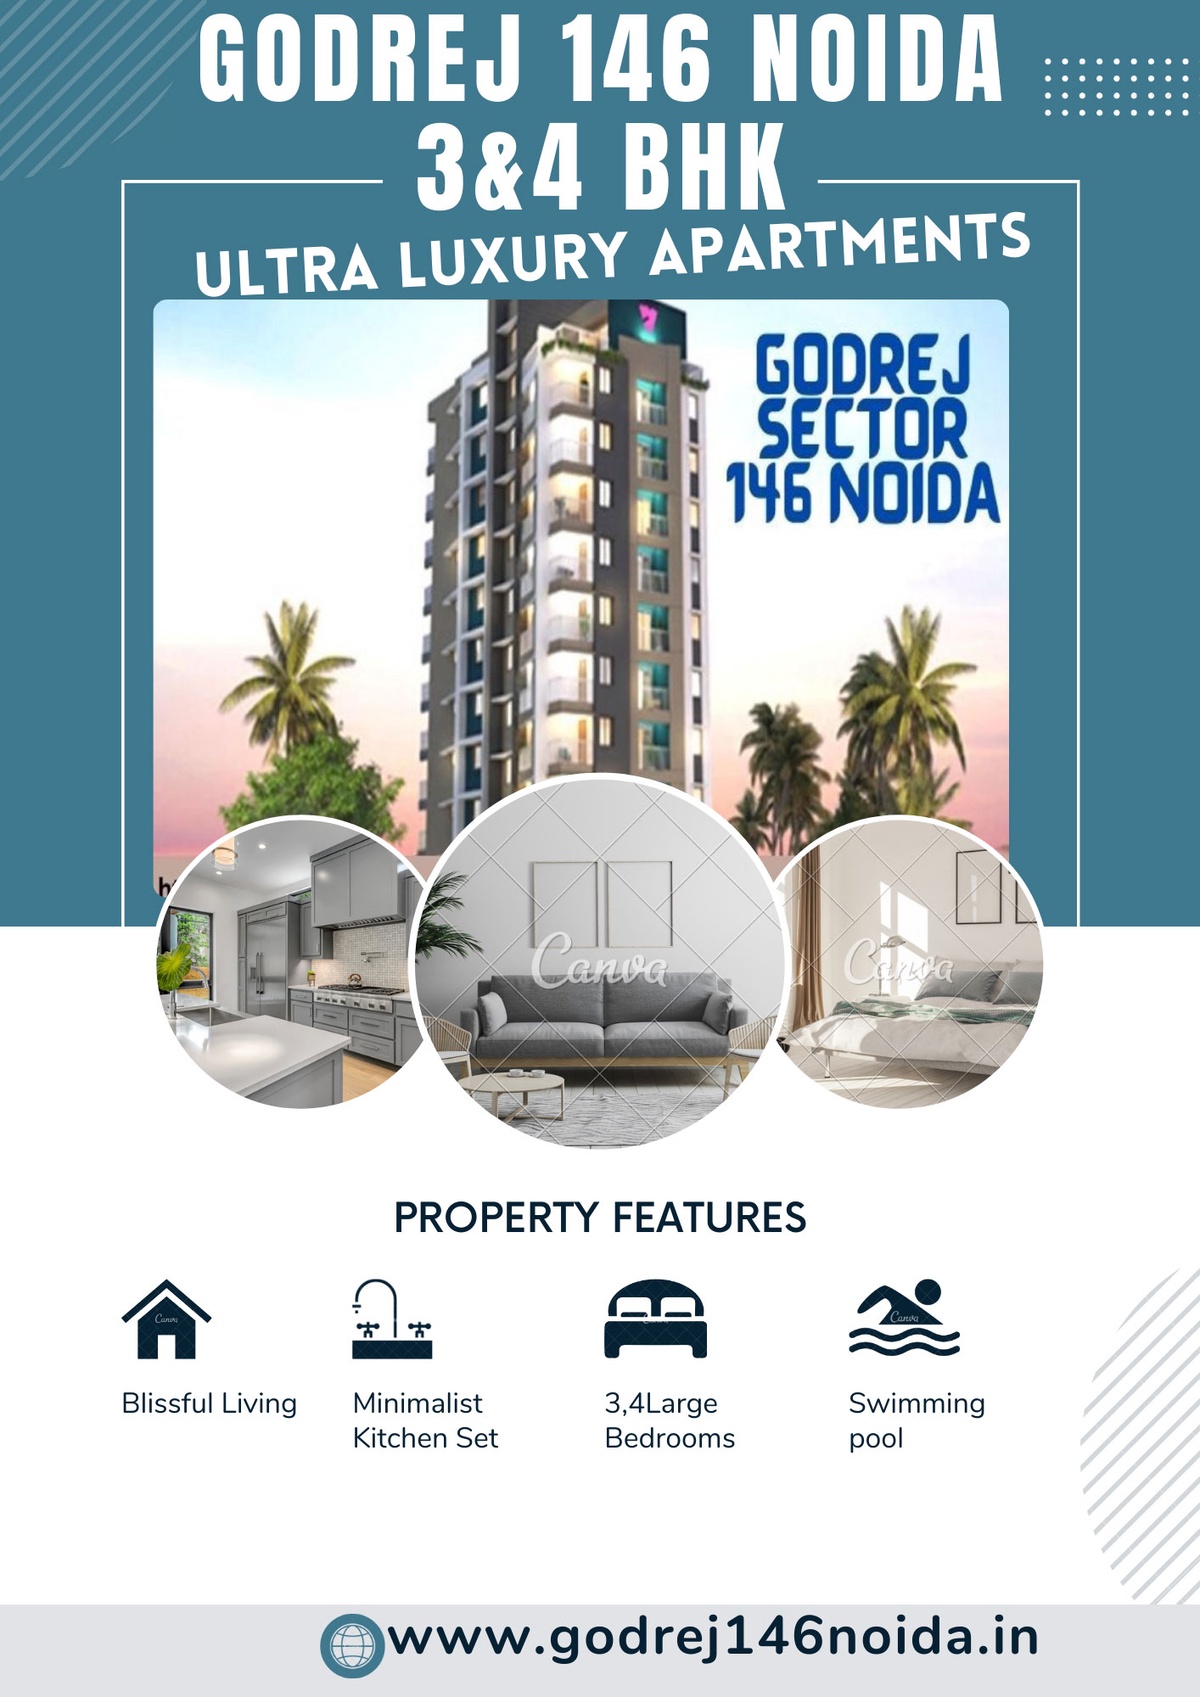 Why Should you buy a Godrej Sector 146 Noida?